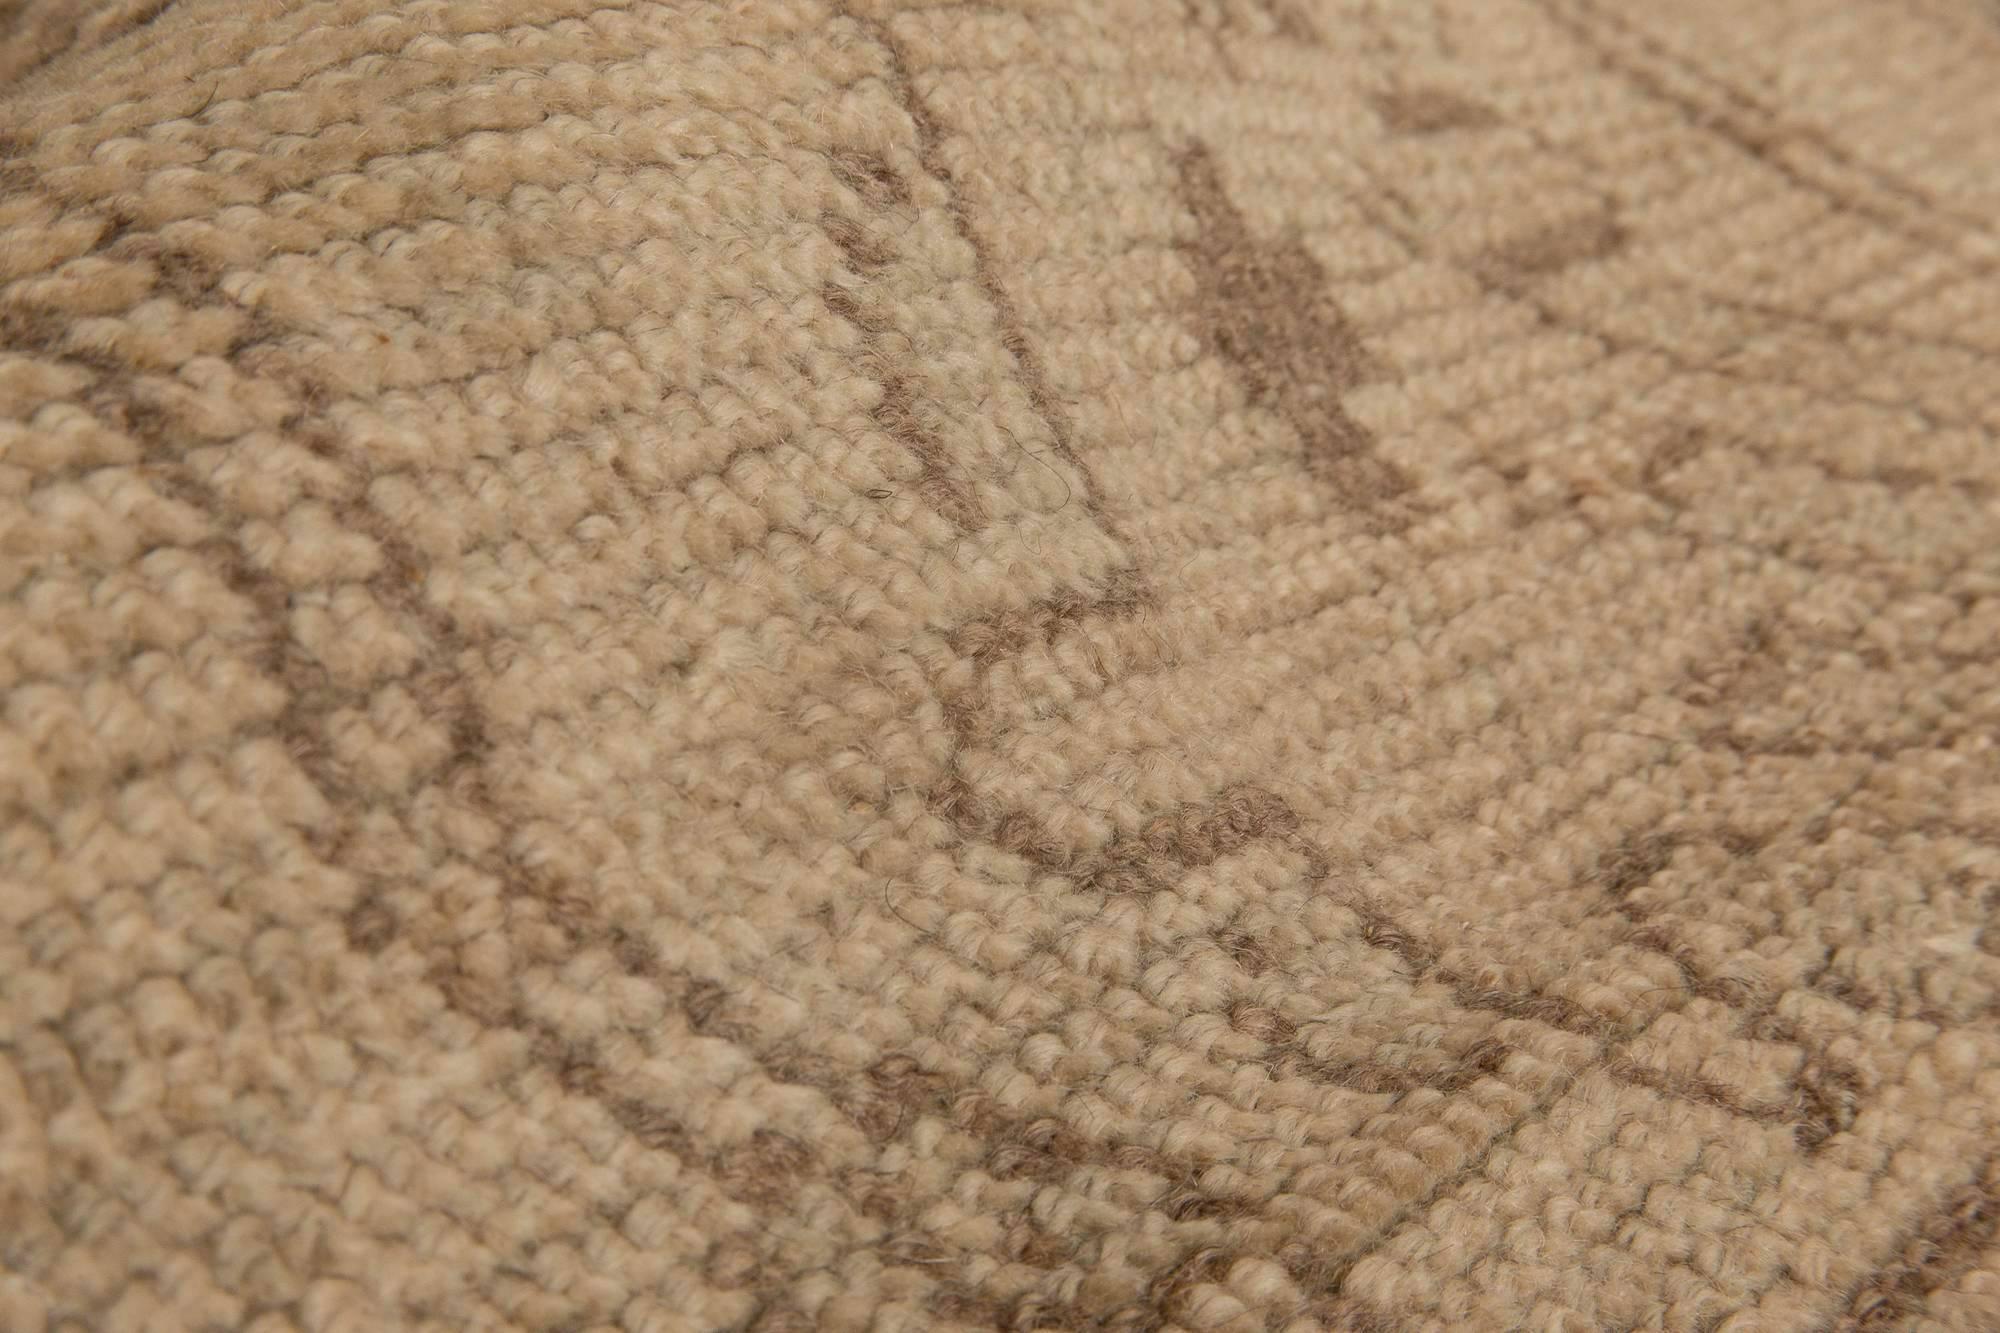 Antique Turkish Oushak handwoven wool rug
Size: 12'0